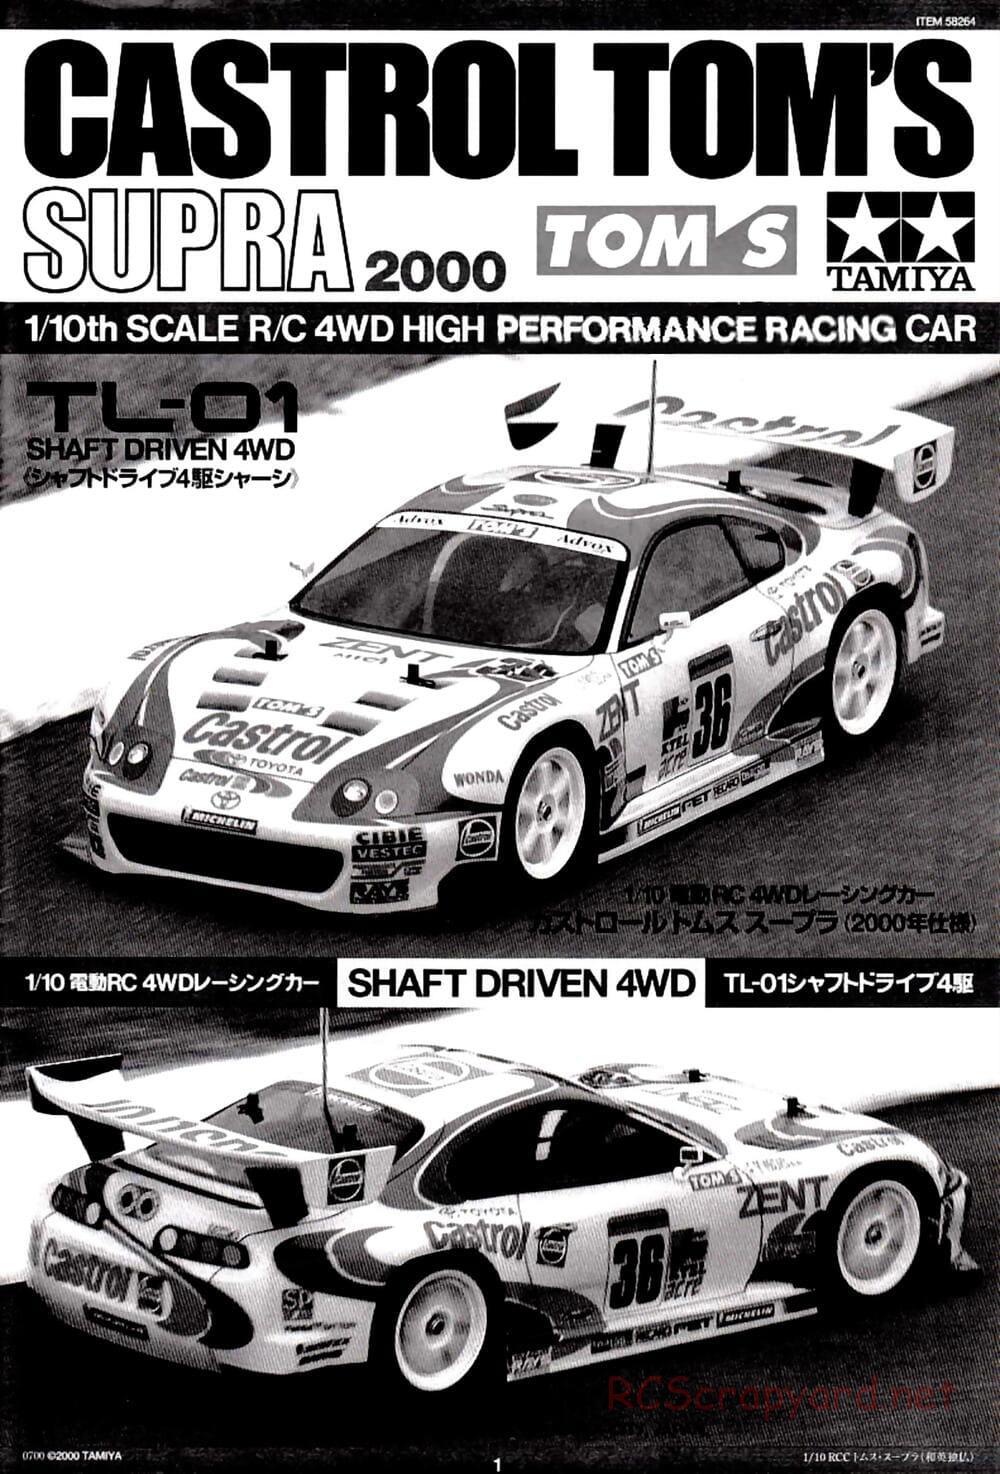 Tamiya - Castrol Tom's Supra 2000 - TL-01 Chassis - Manual - Page 1